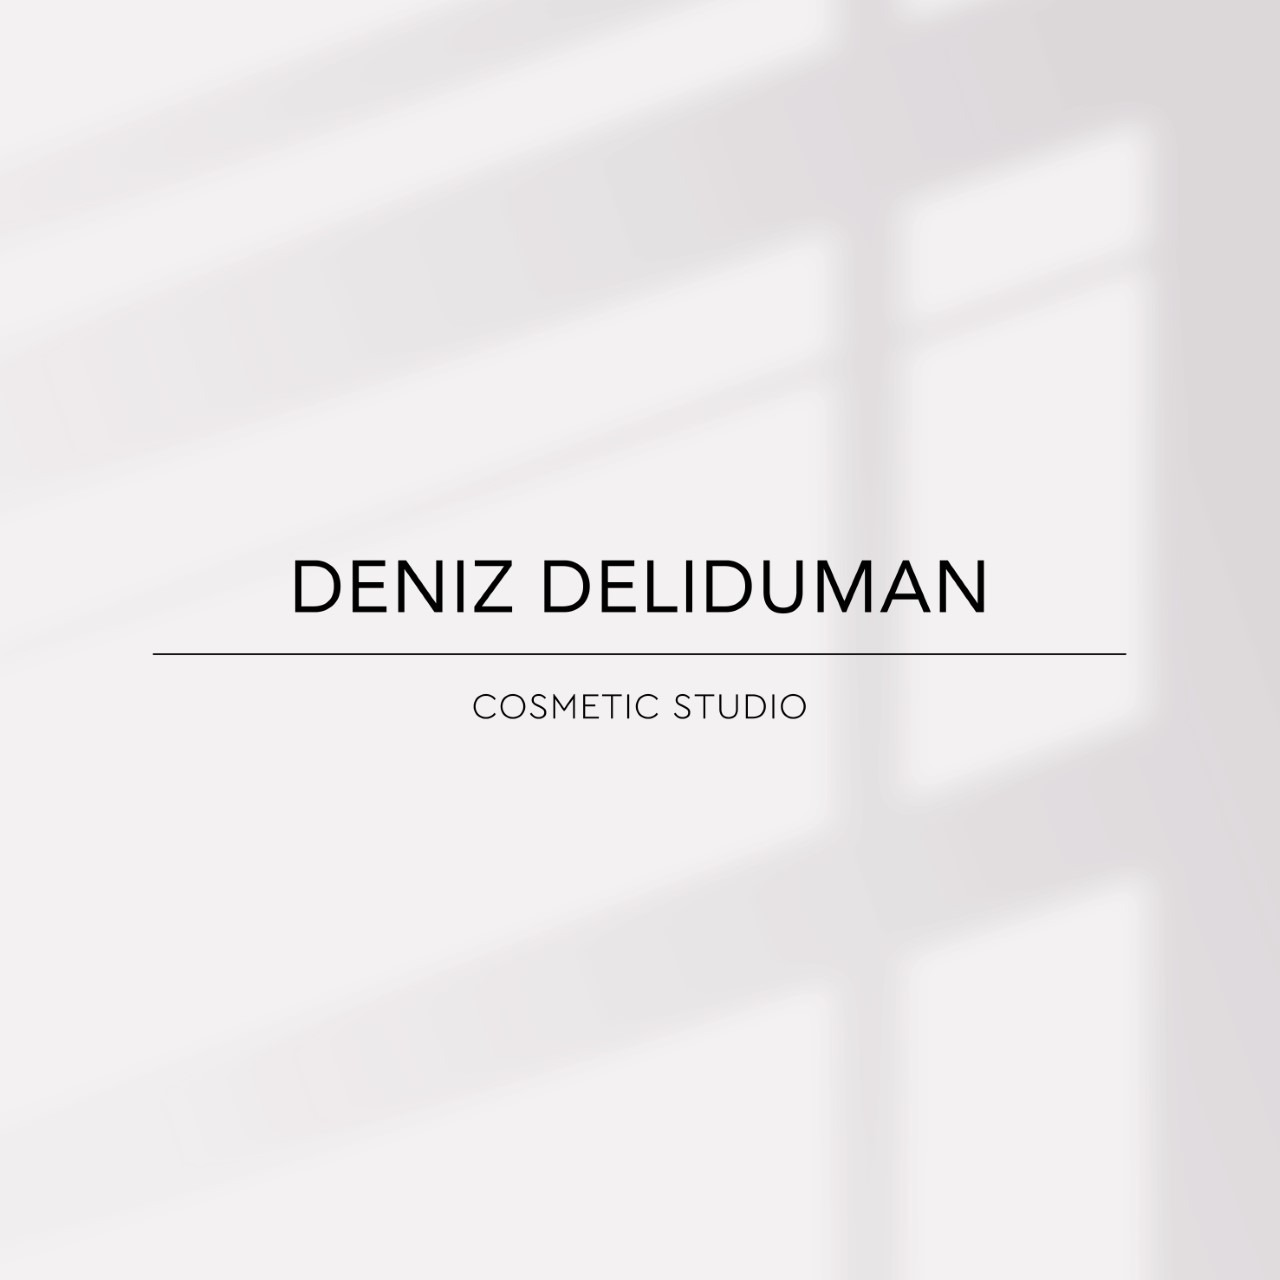 Deniz Deliduman Cosmetic Studio in München - Logo